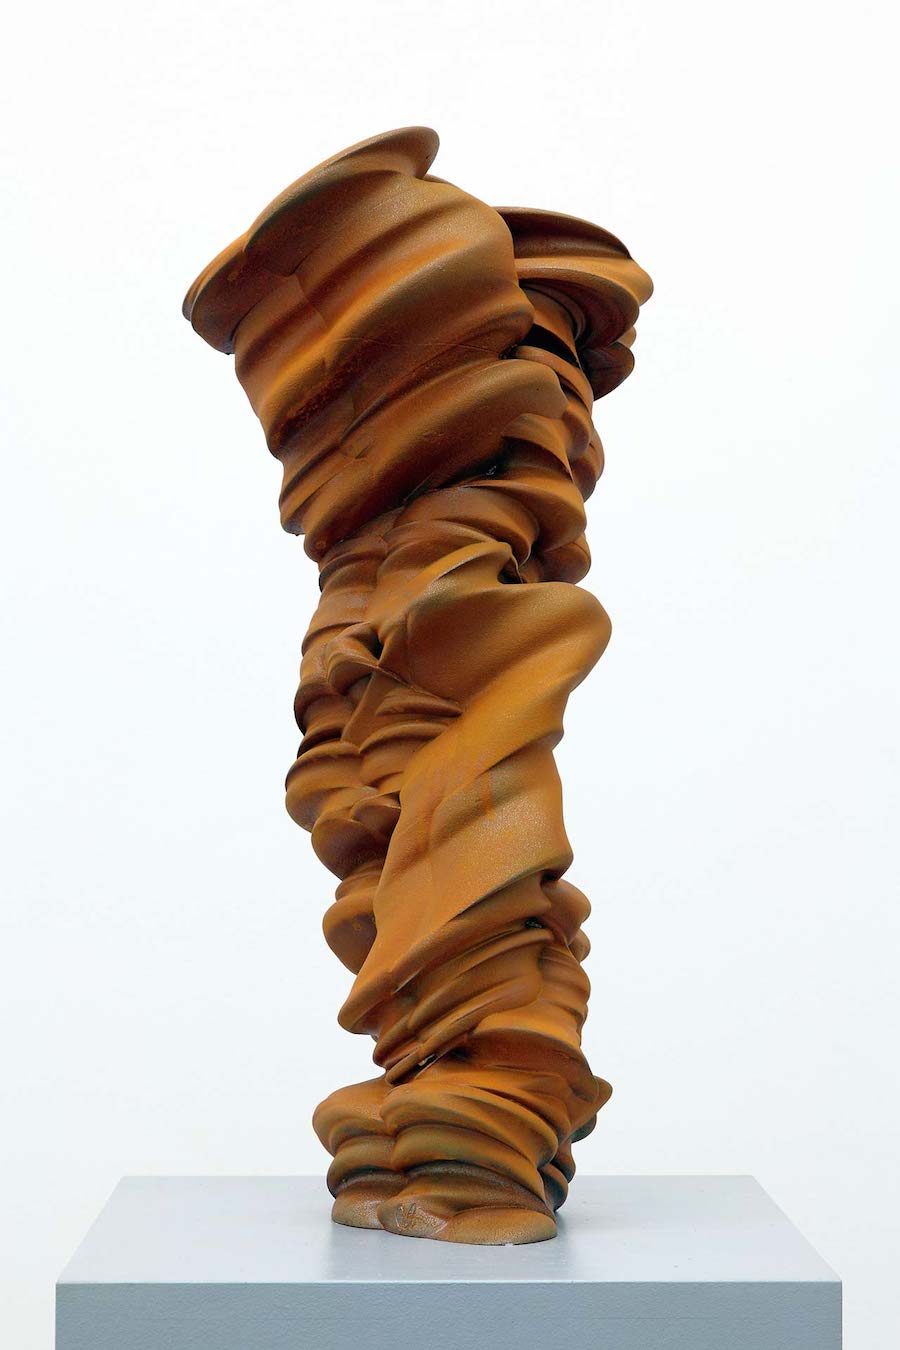 Sculpture Exhibition in Darmstadt by Tony Cragg-13